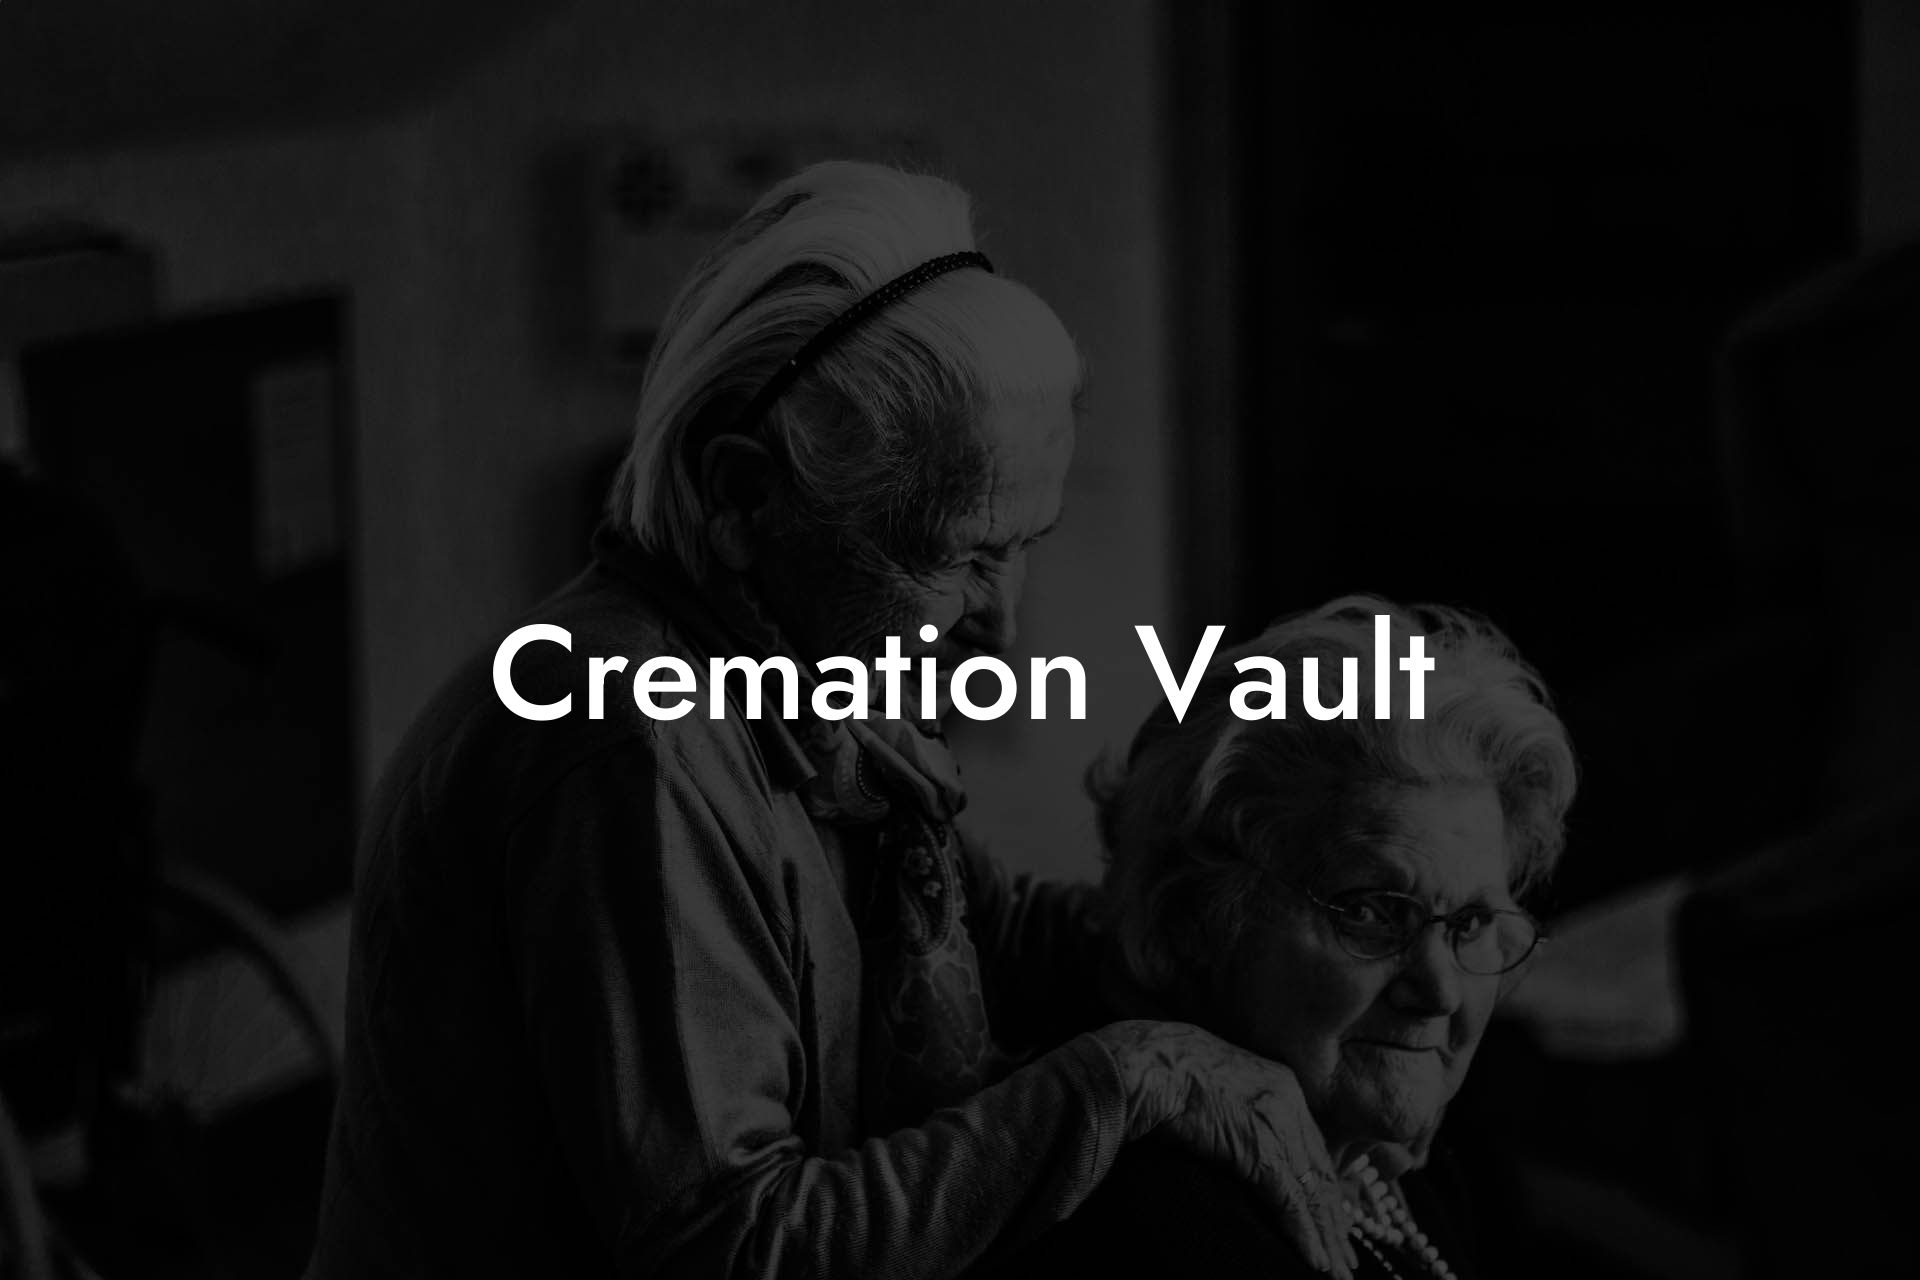 Cremation Vault